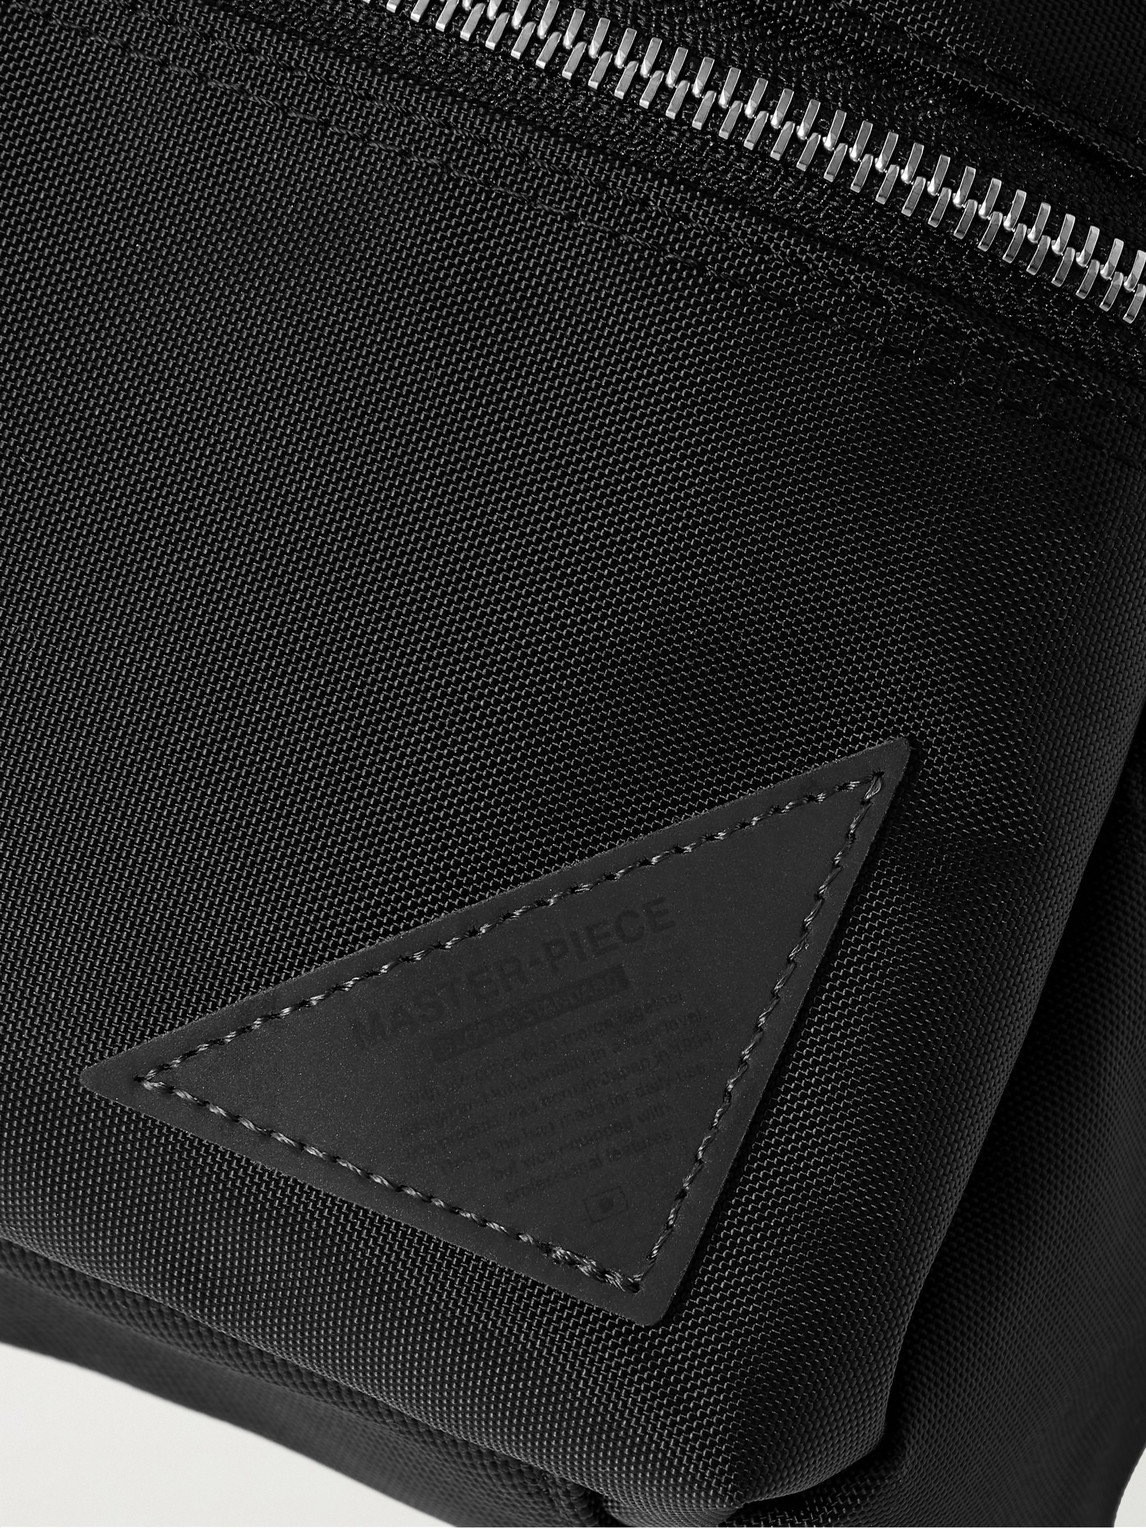 Shop Master-piece Various Toray Gaifu® 420d Nylon Messenger Bag In Black